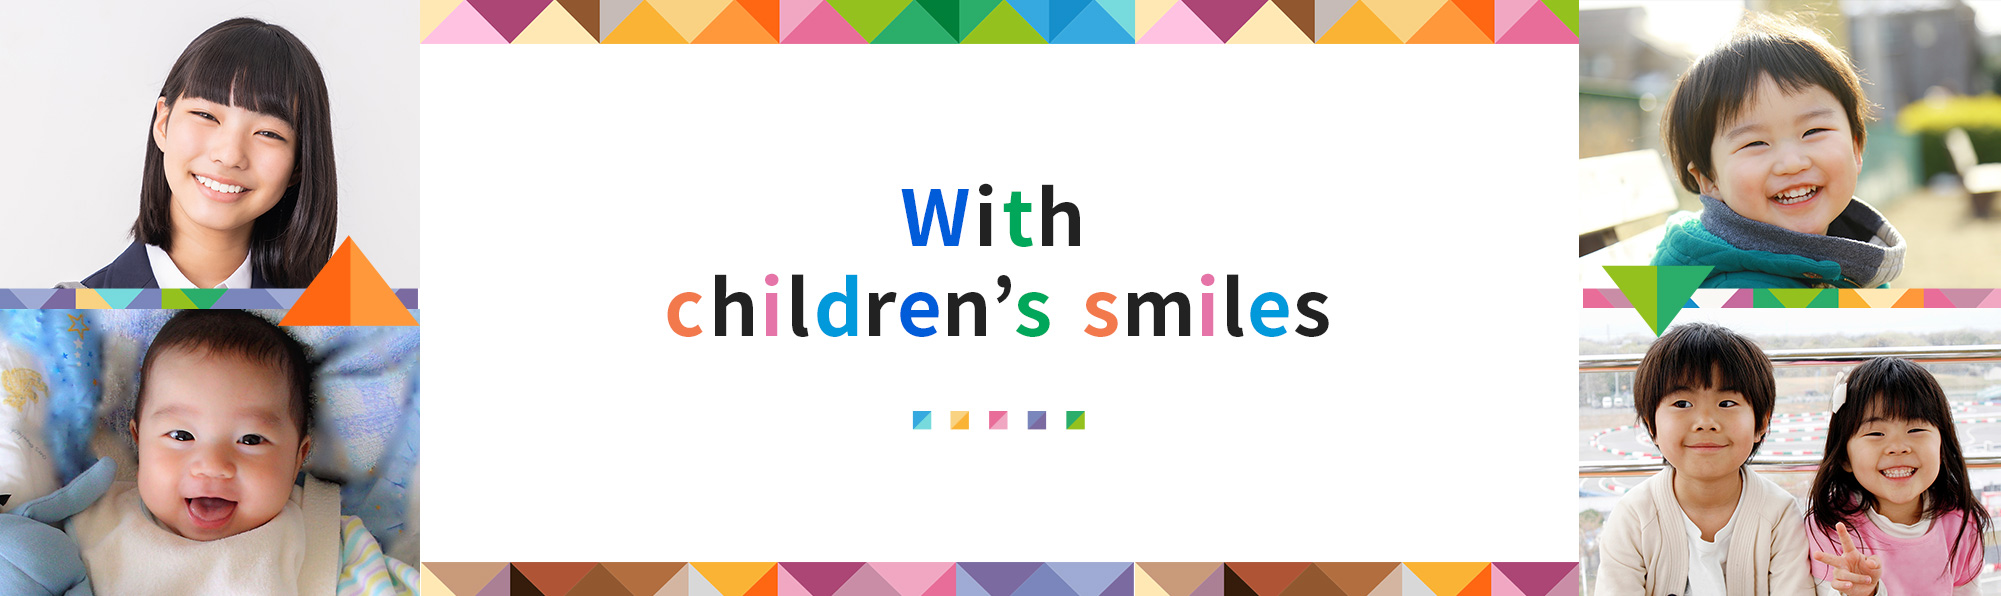 With children’s smiles